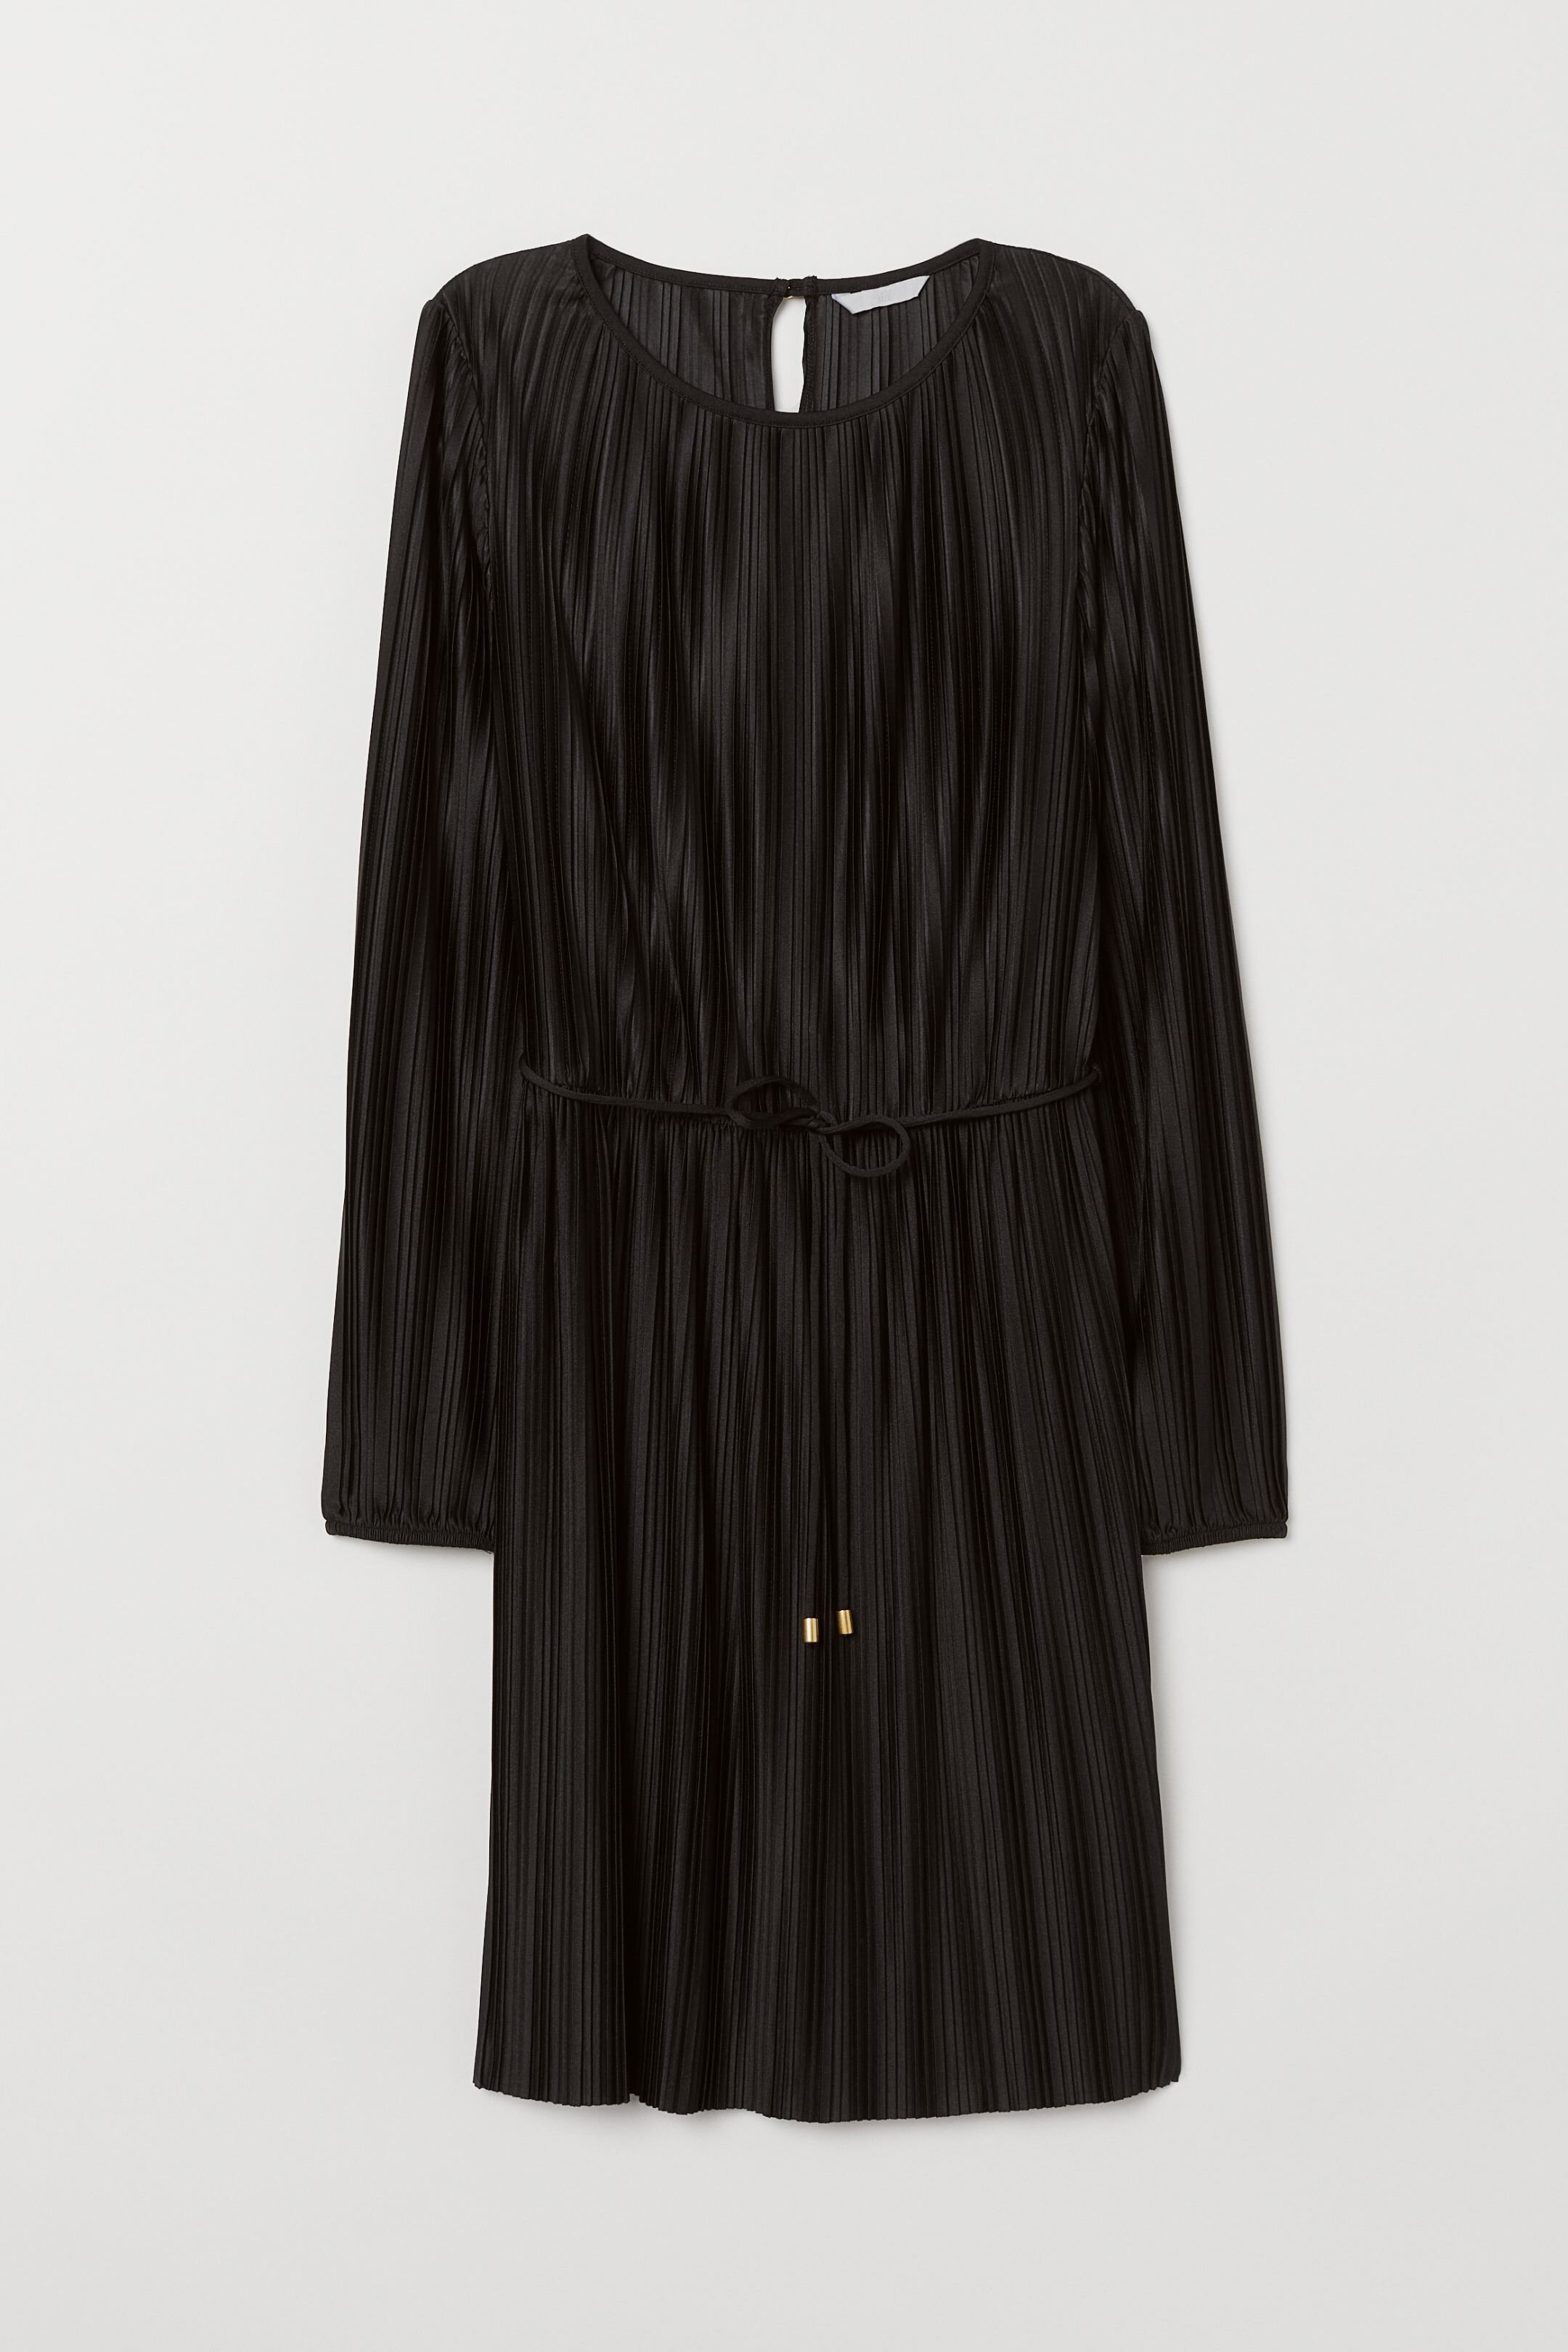 H&M Pleated Mini Dress in Black.jpg